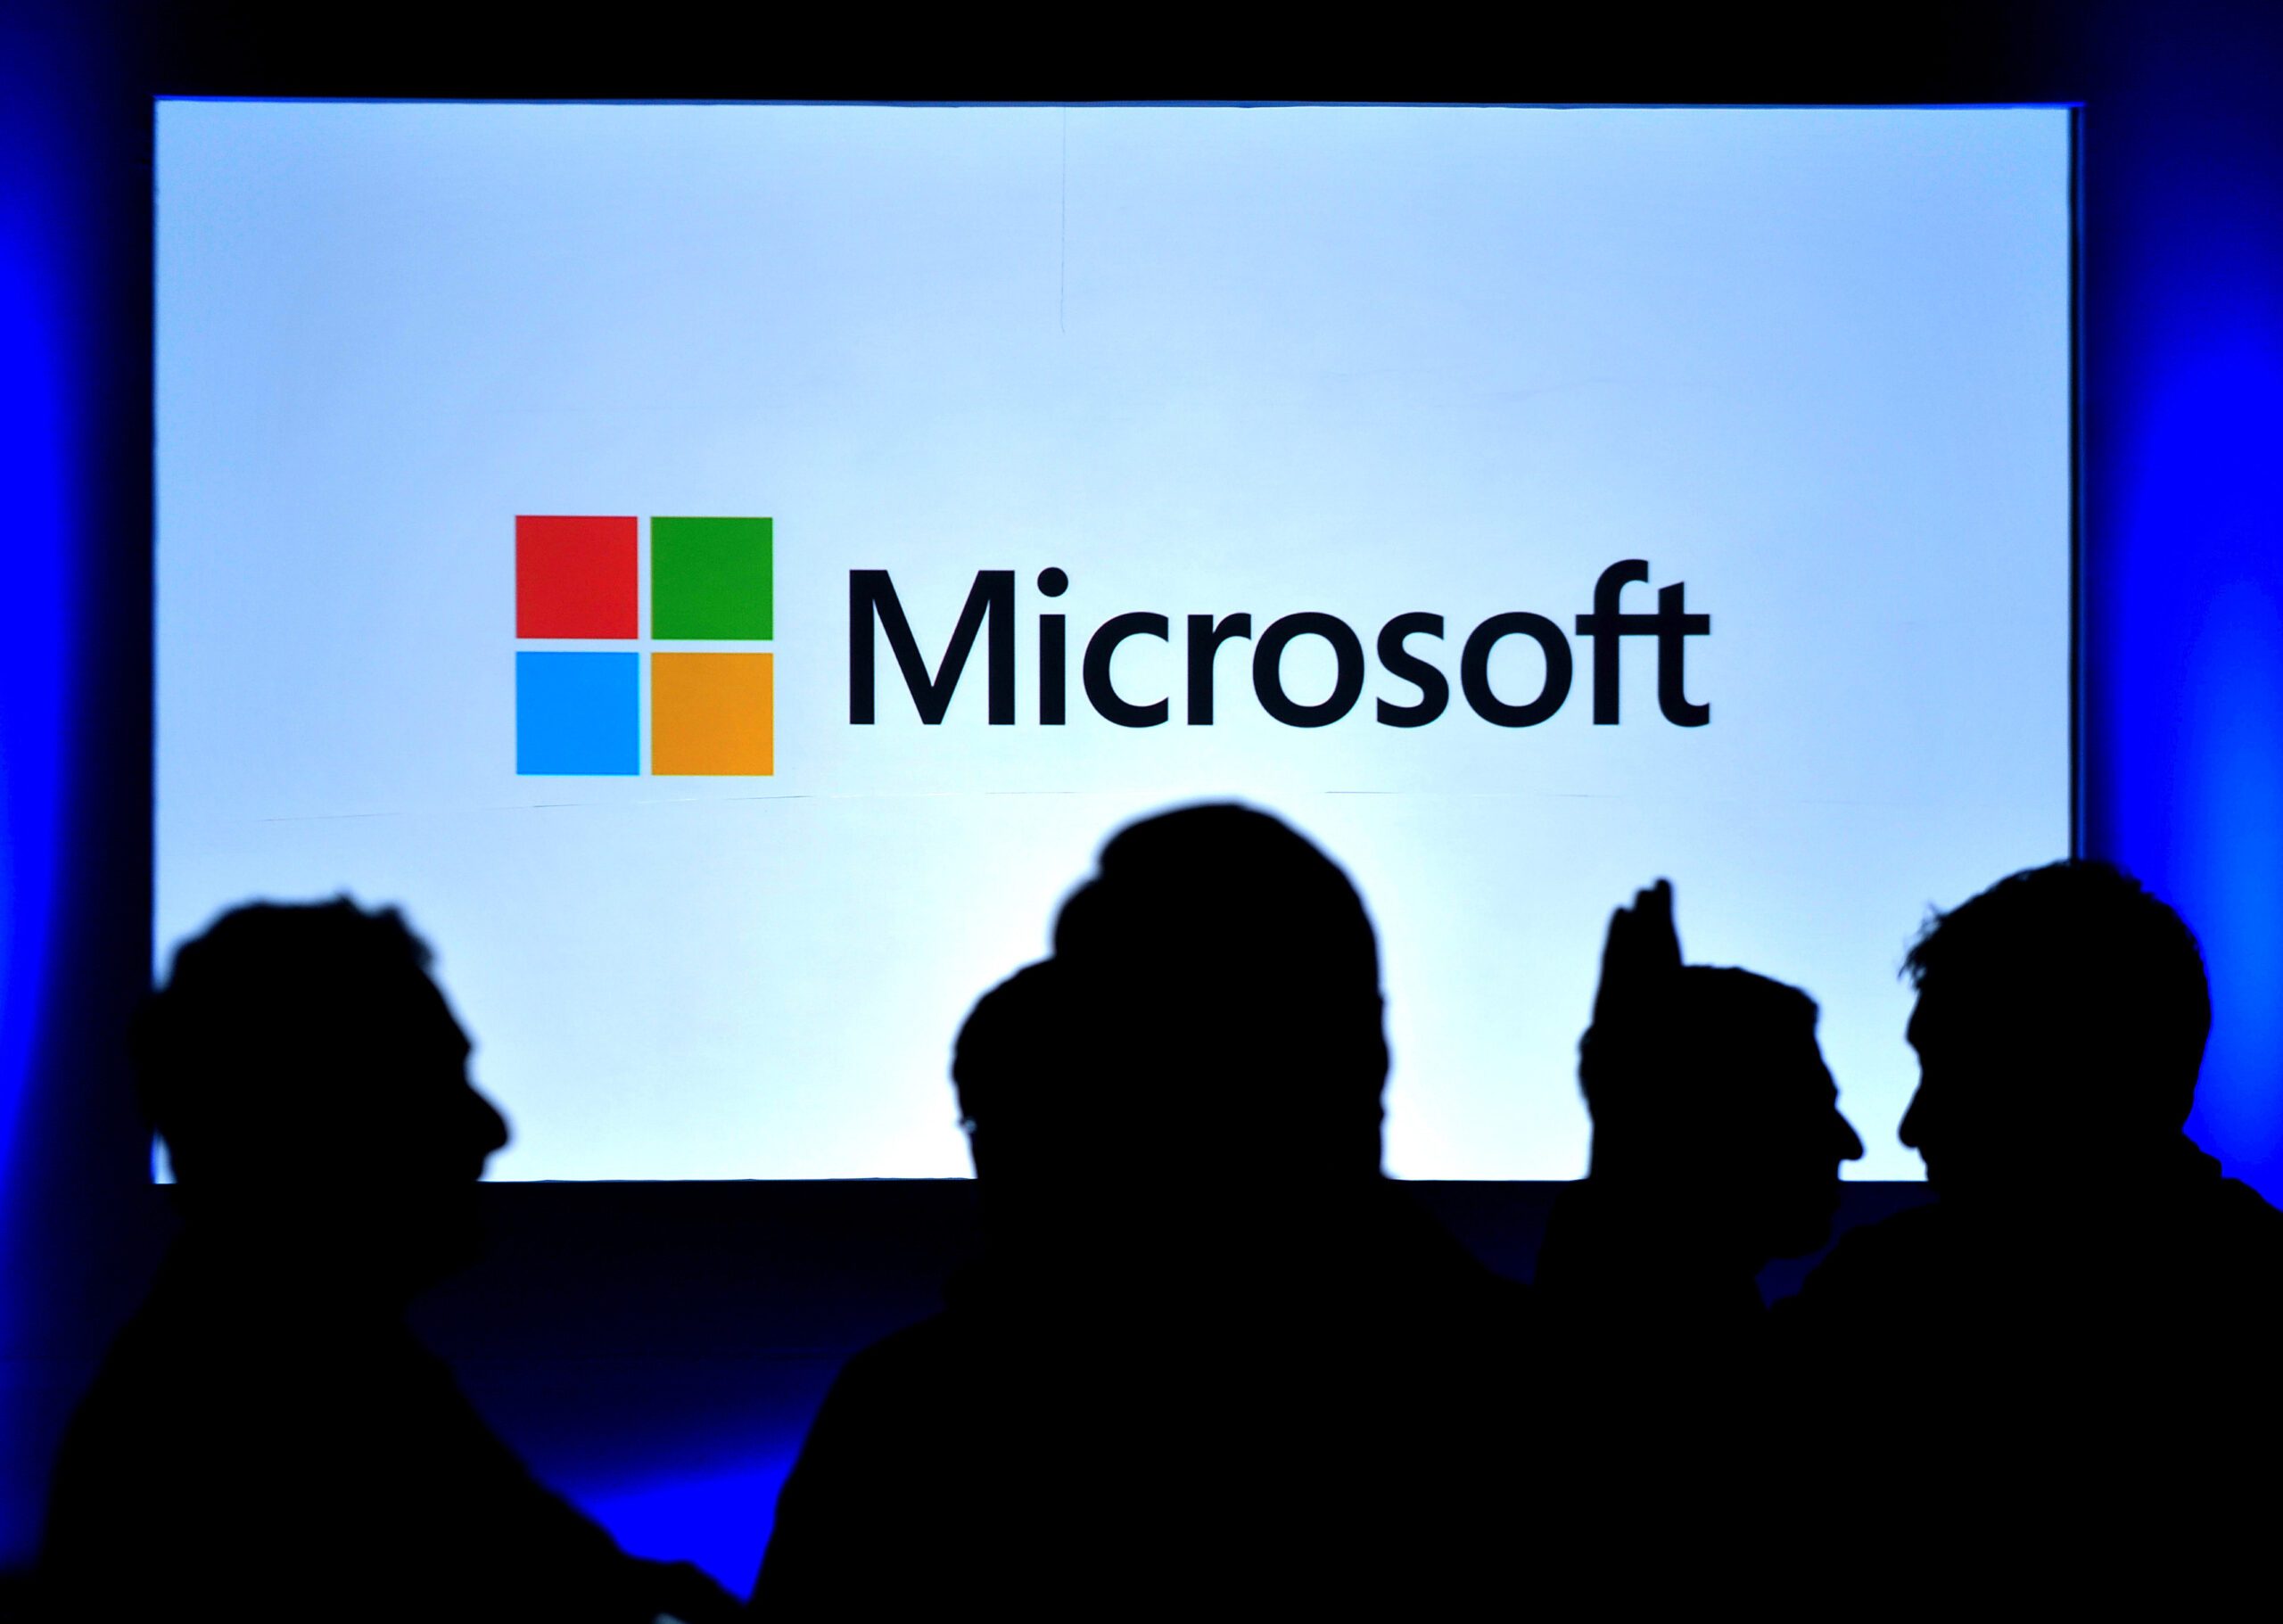 Windows 10 reaches 270 million users – Microsoft